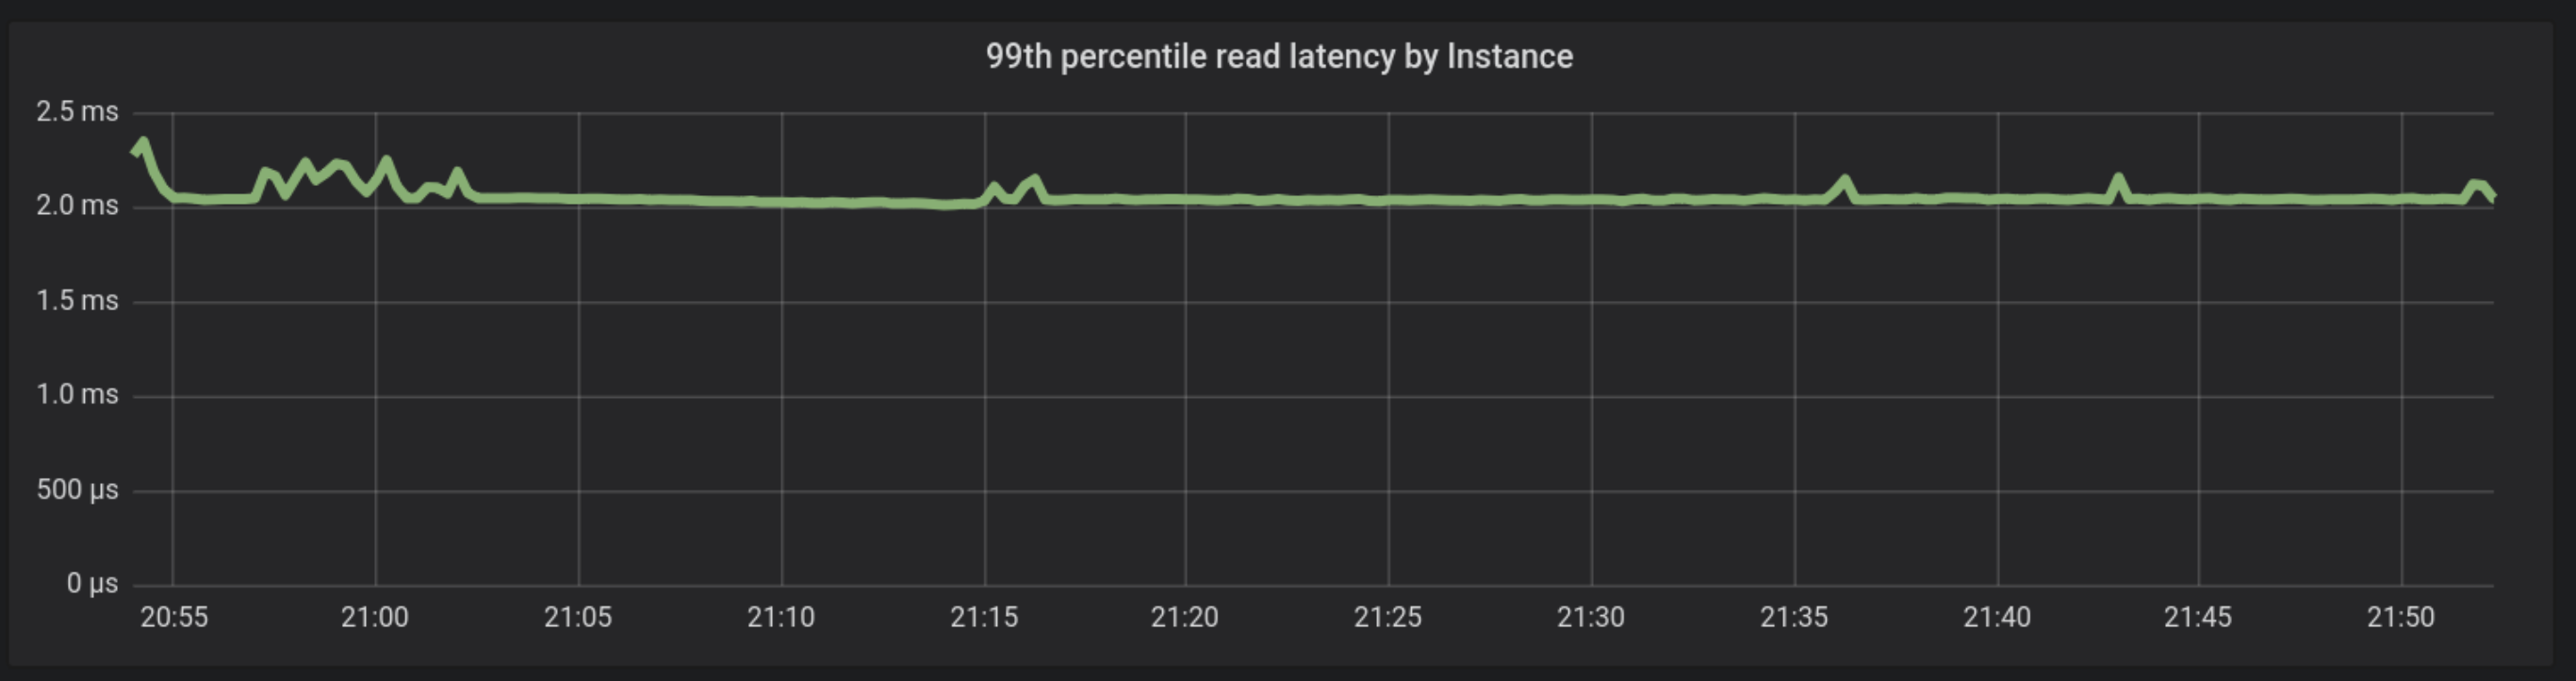 Figure 6: p99 read latencies for ScyllaDB on the AWS i3en.24xlarge